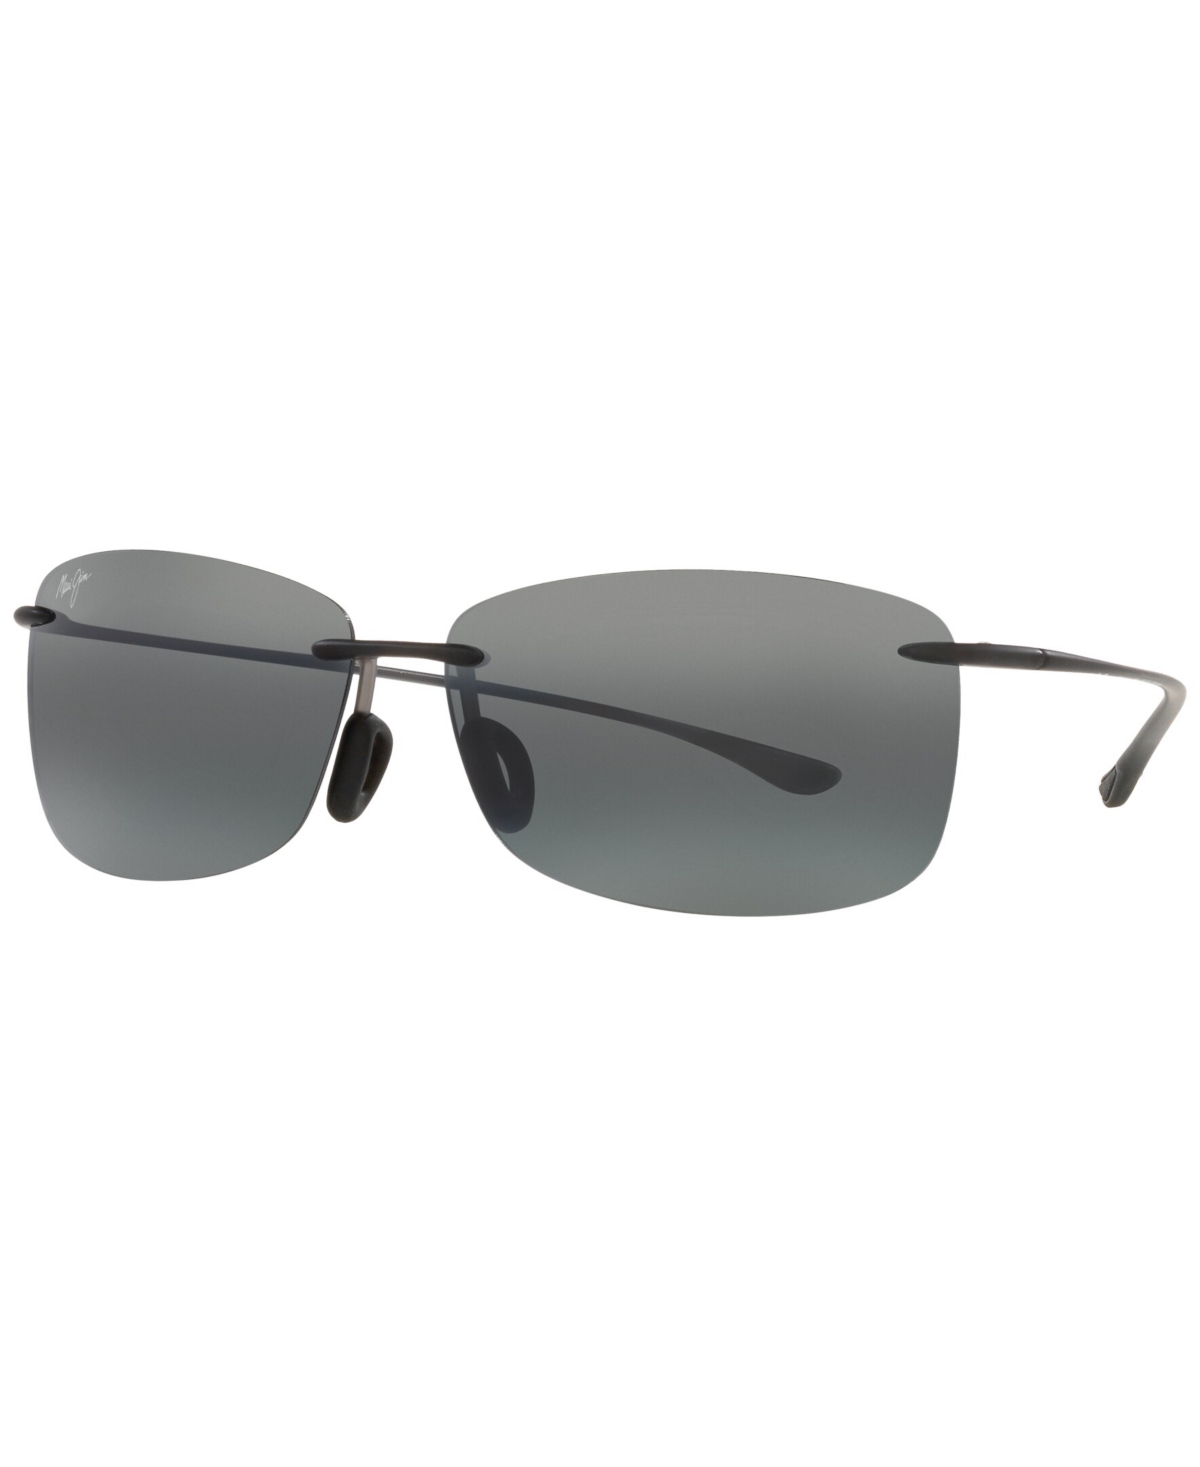 Unisex Polarized Sunglasses, MJ000593 Akau 61 - Transparent